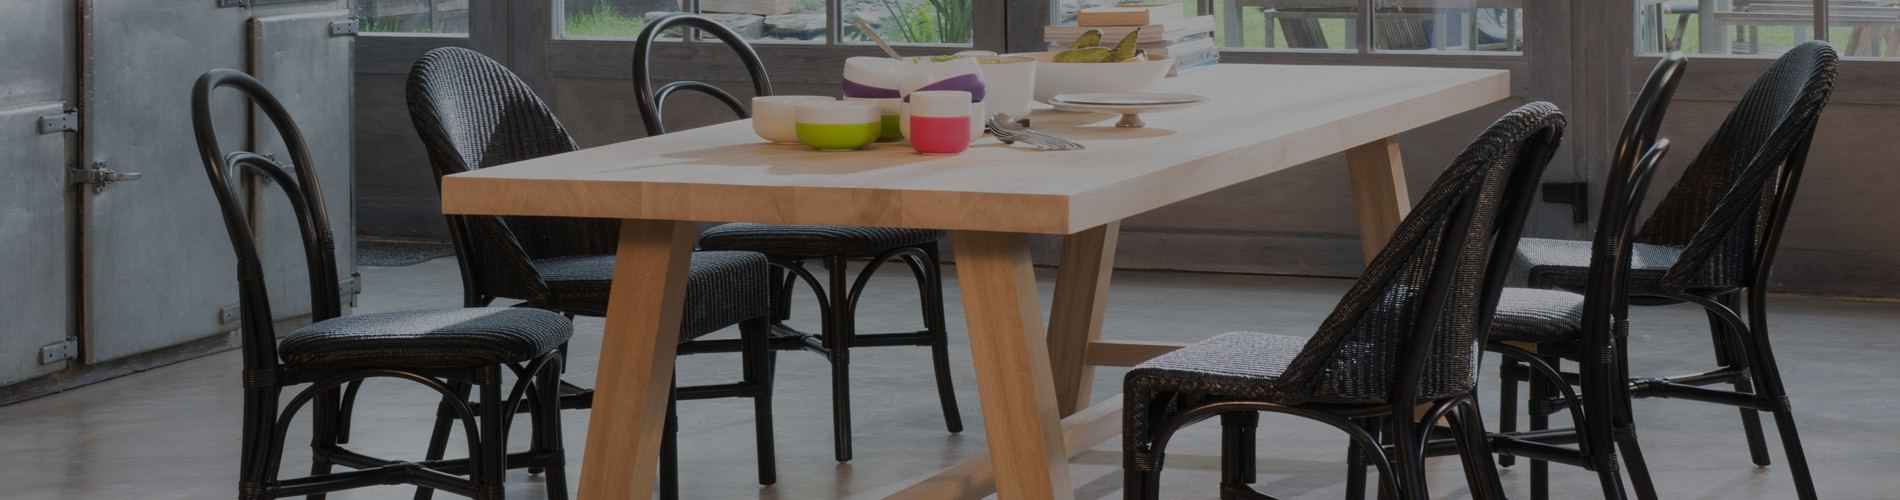 Designer Kitchen Tables | Extendable Kitchen Tables